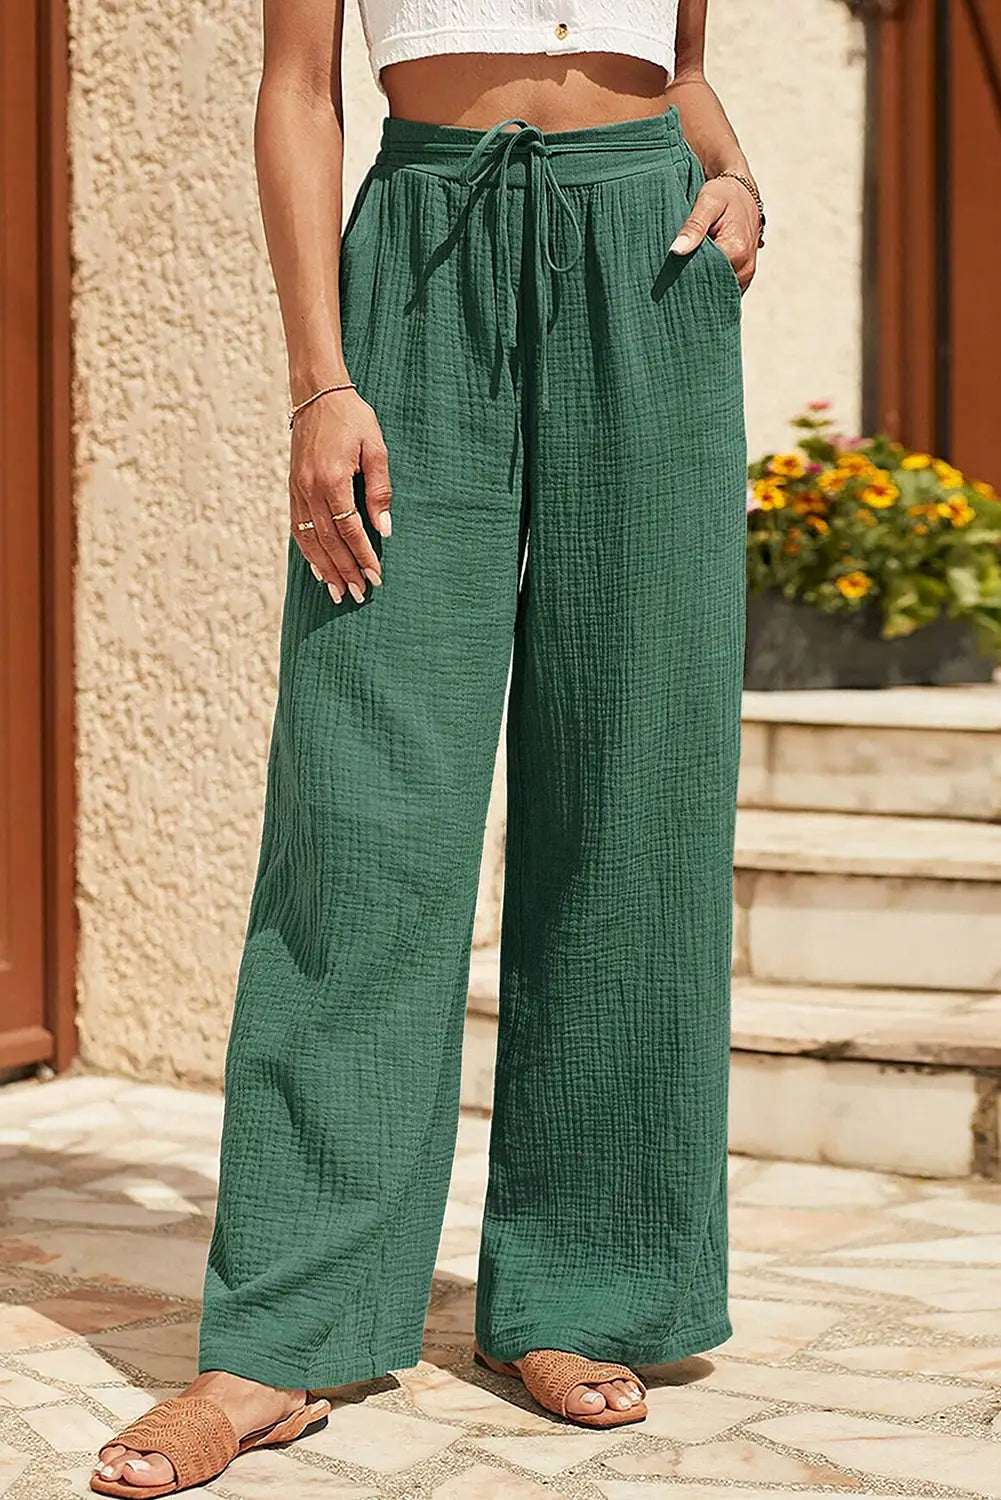 Crinkle textured wide leg pants - mist green / 6 / 100% cotton